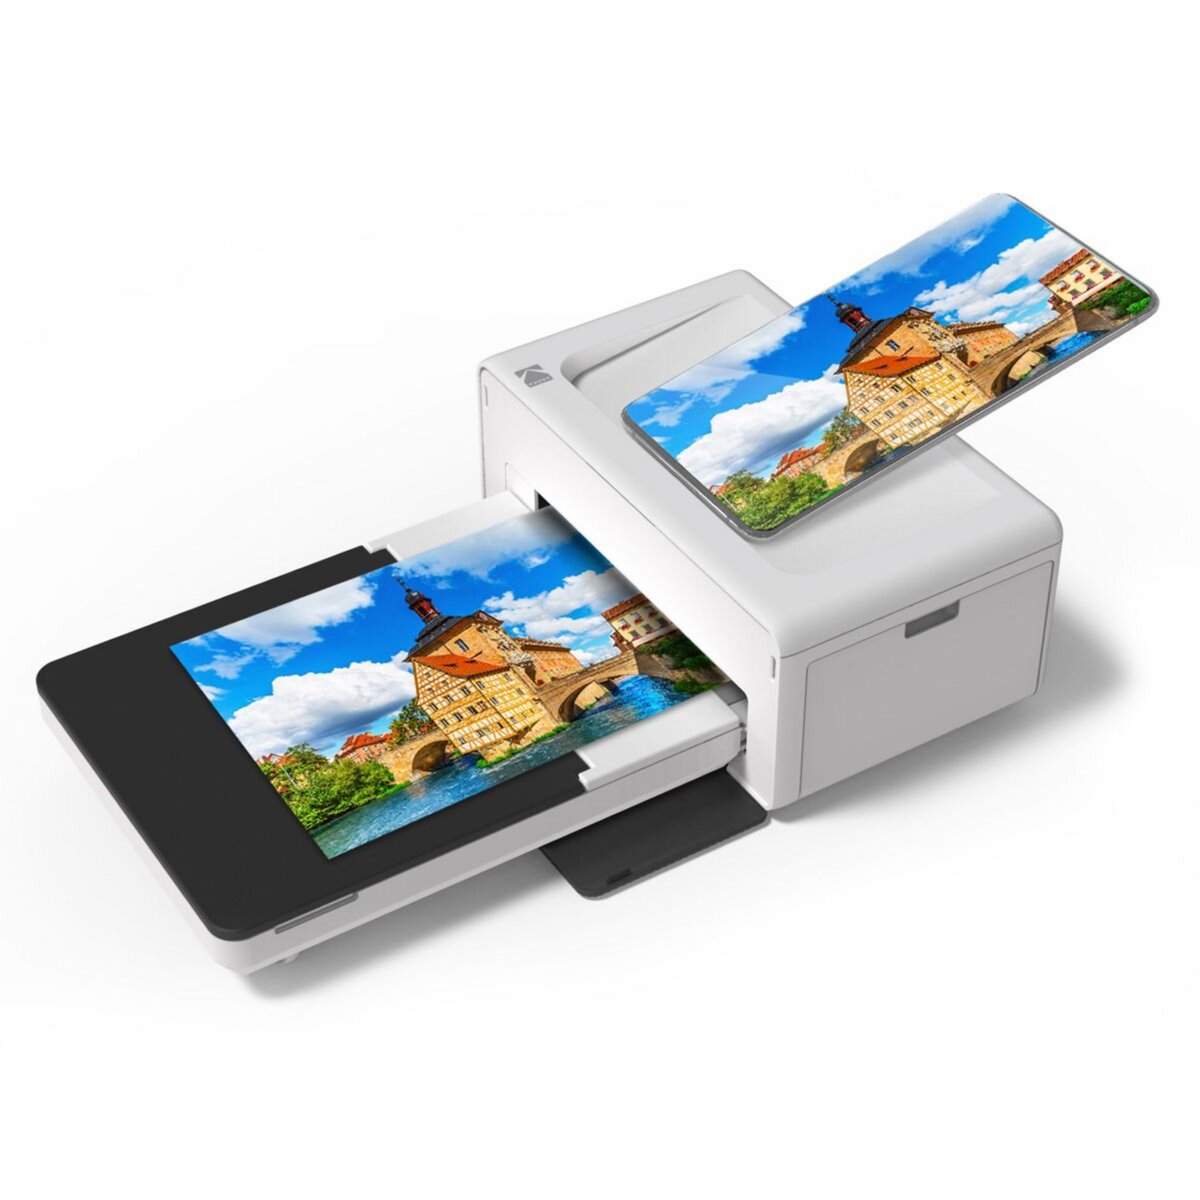 Kodak Imprimante photo portable Dock PD460 10 x 15cm Bluetooth